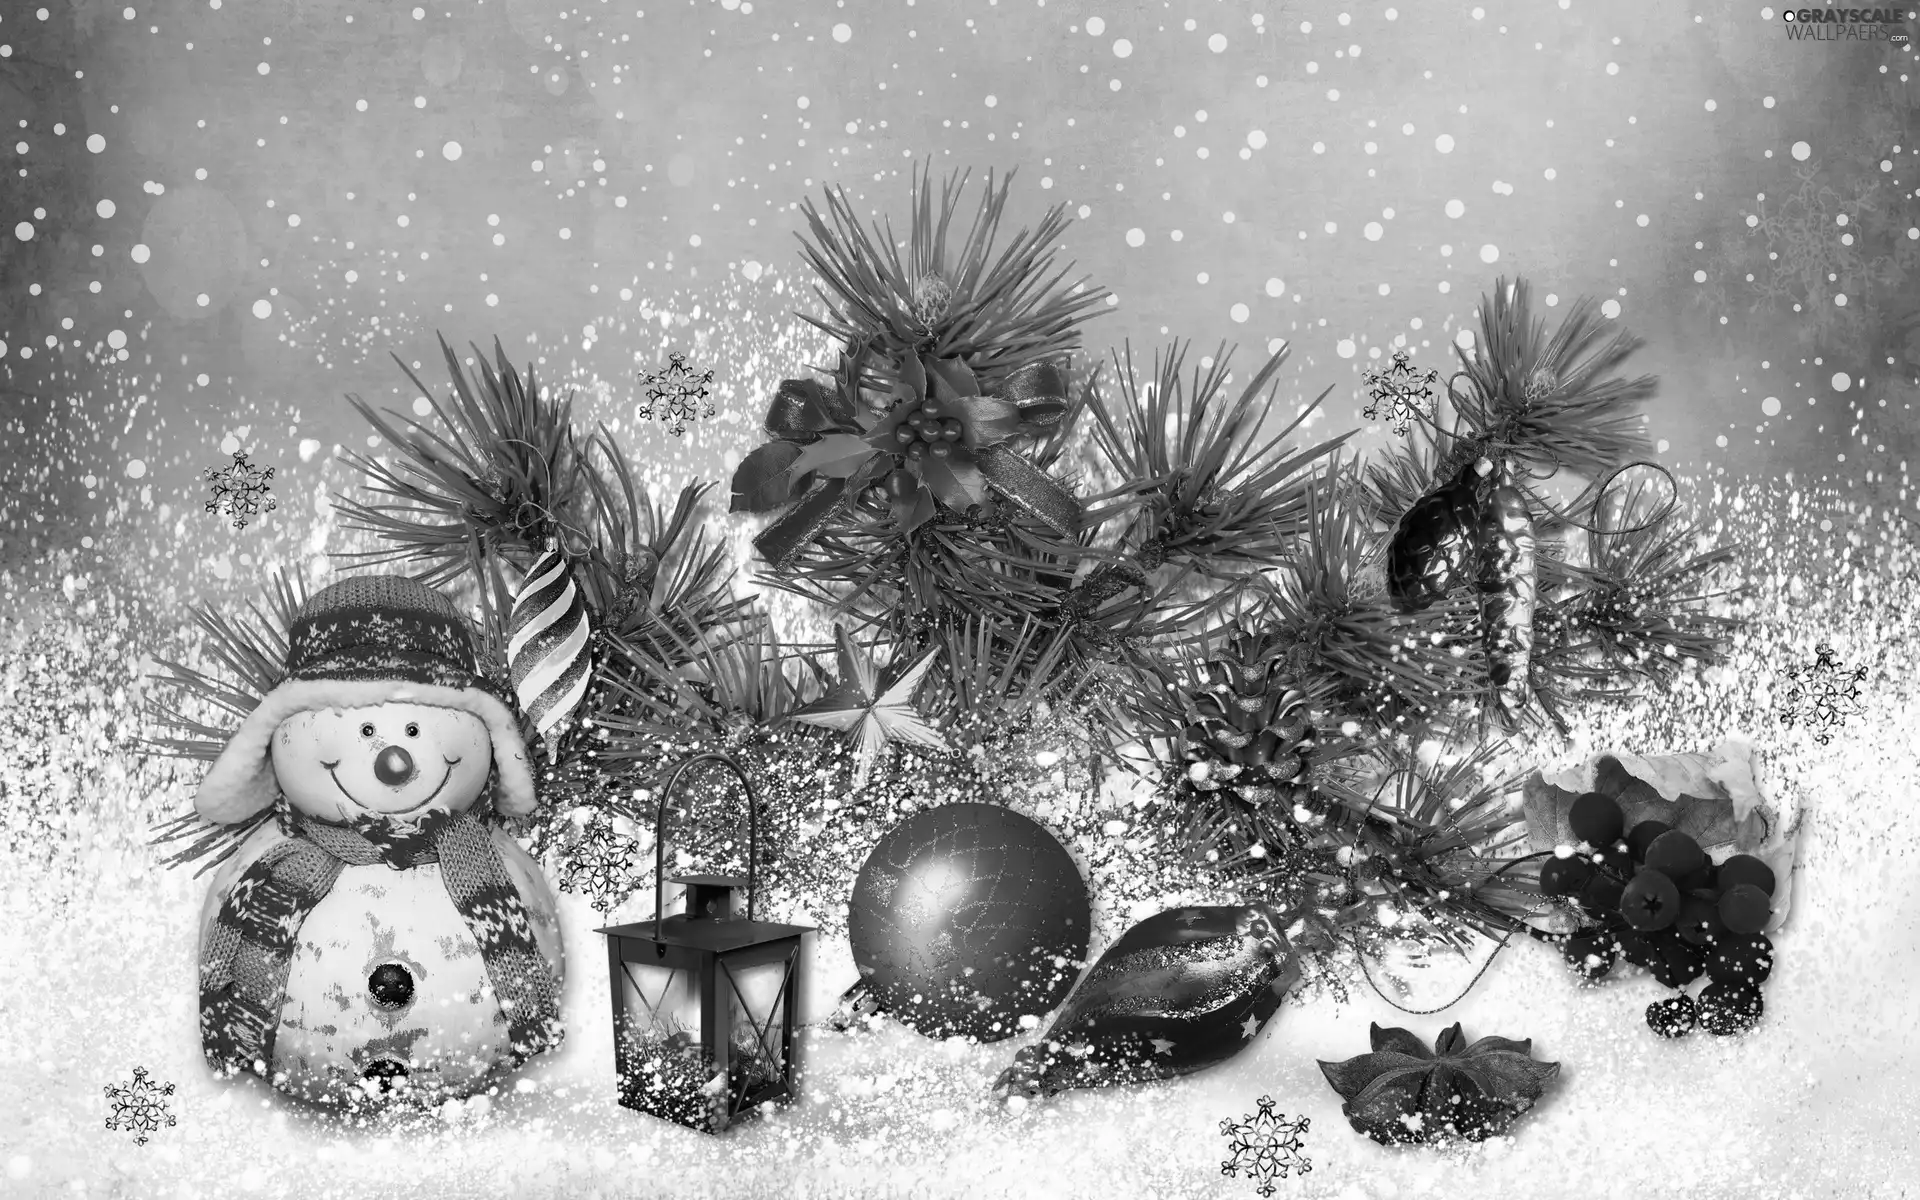 headdress, Snowman, composition, Christmas, snow, lantern